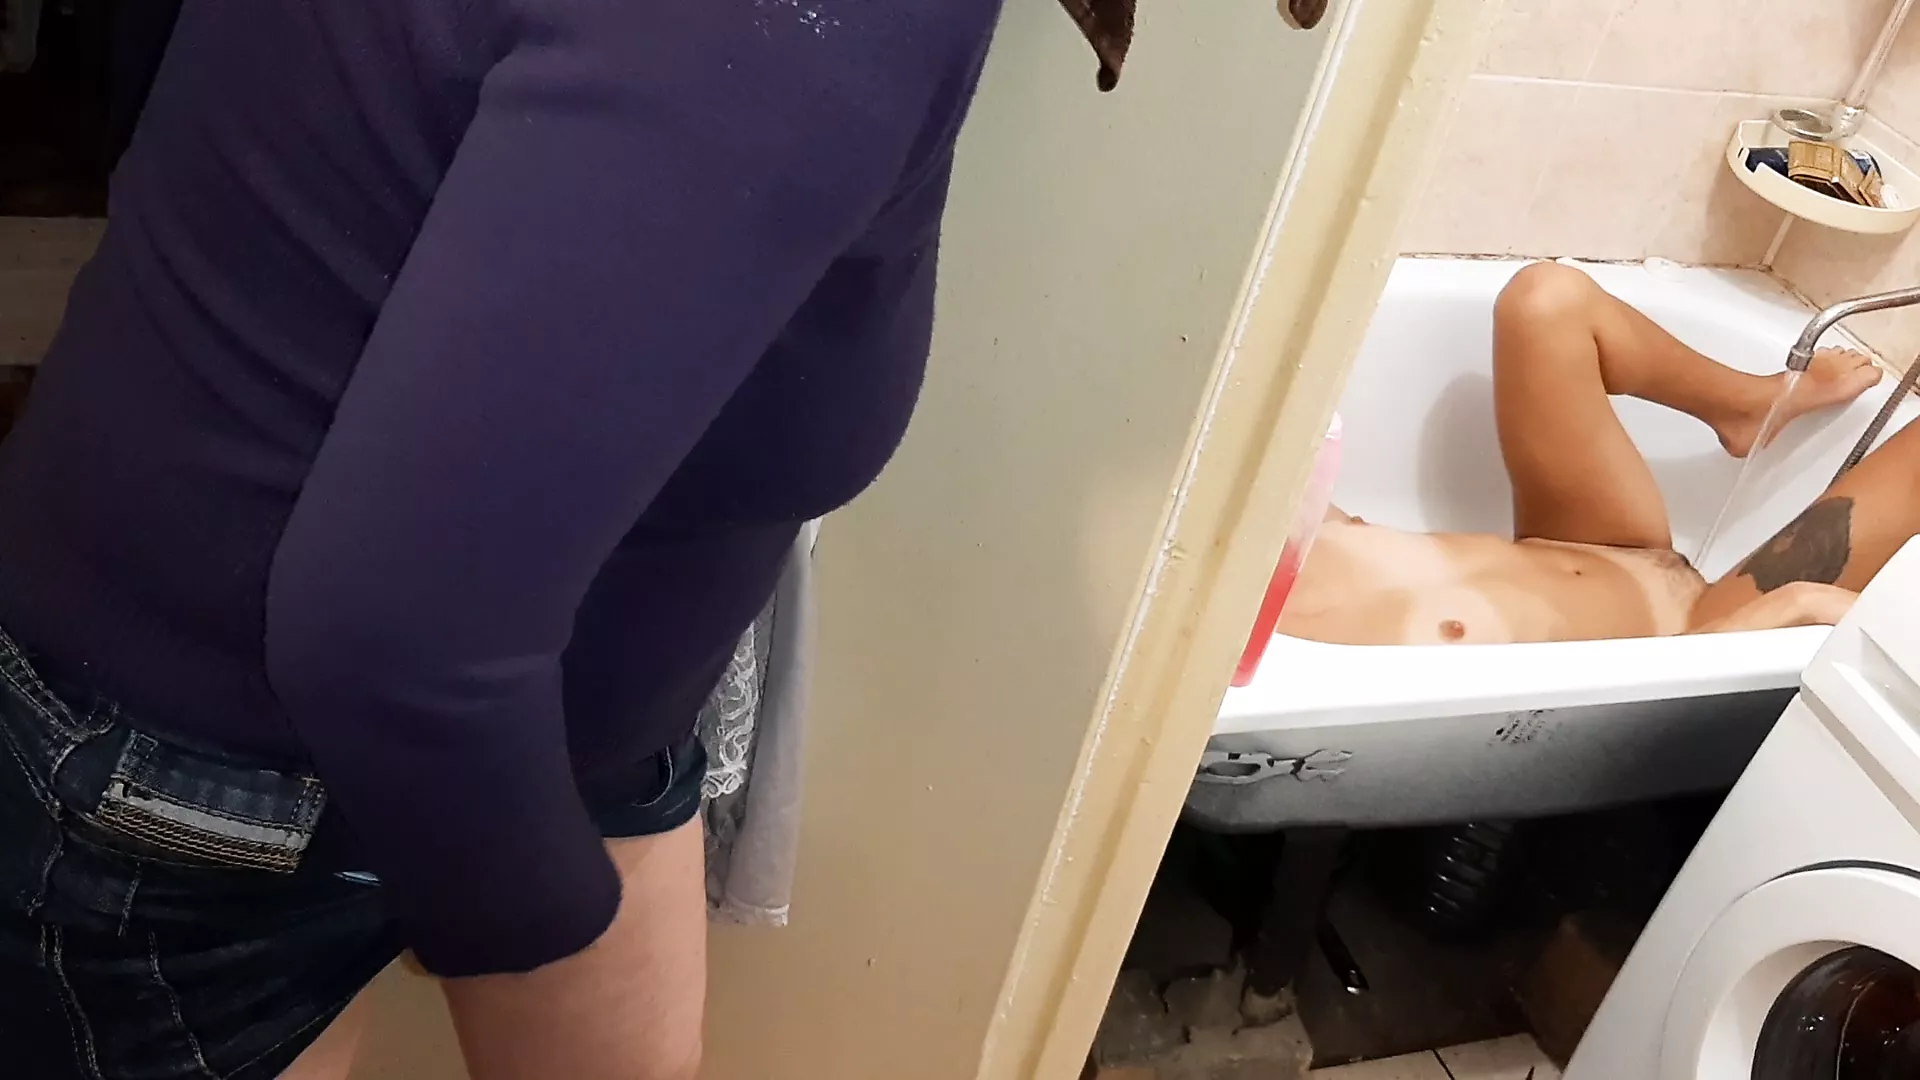 Stepmom checks my girl in the bathroom and masturbated